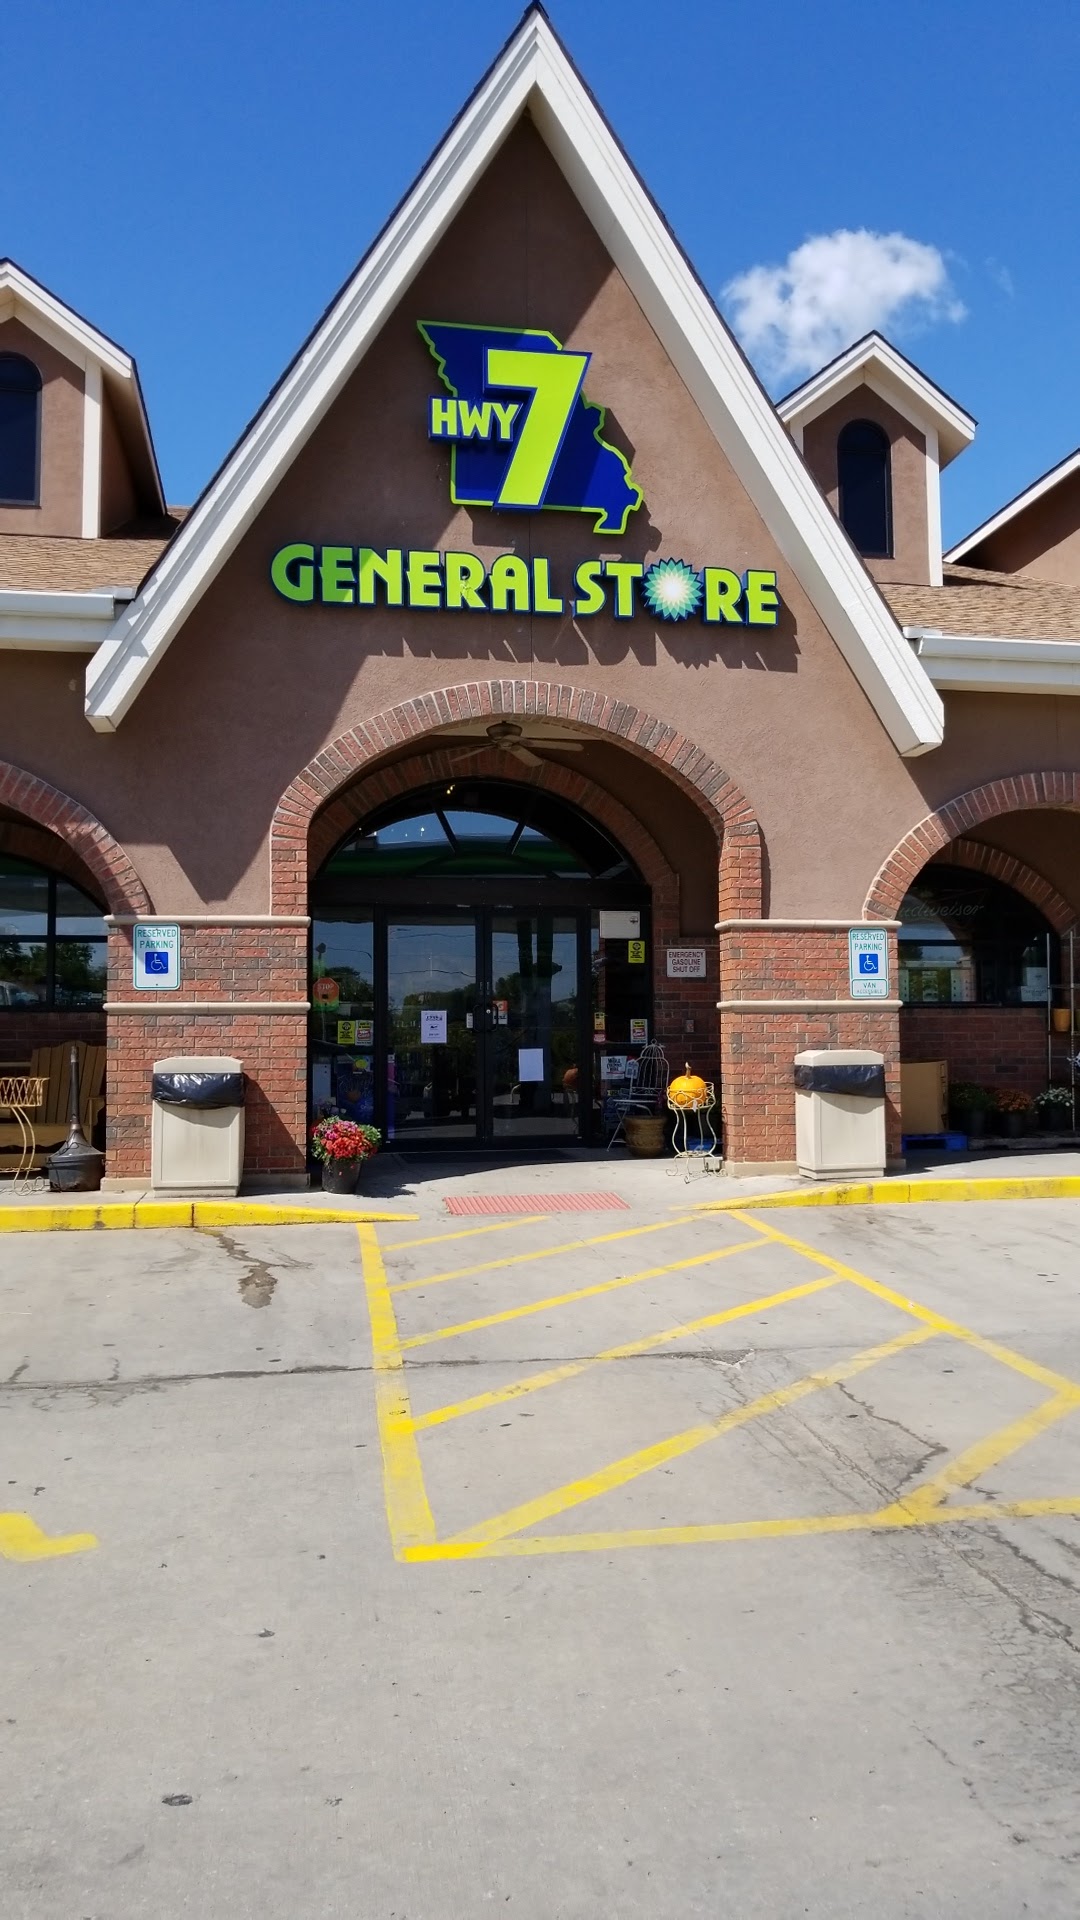 7 Highway General Store